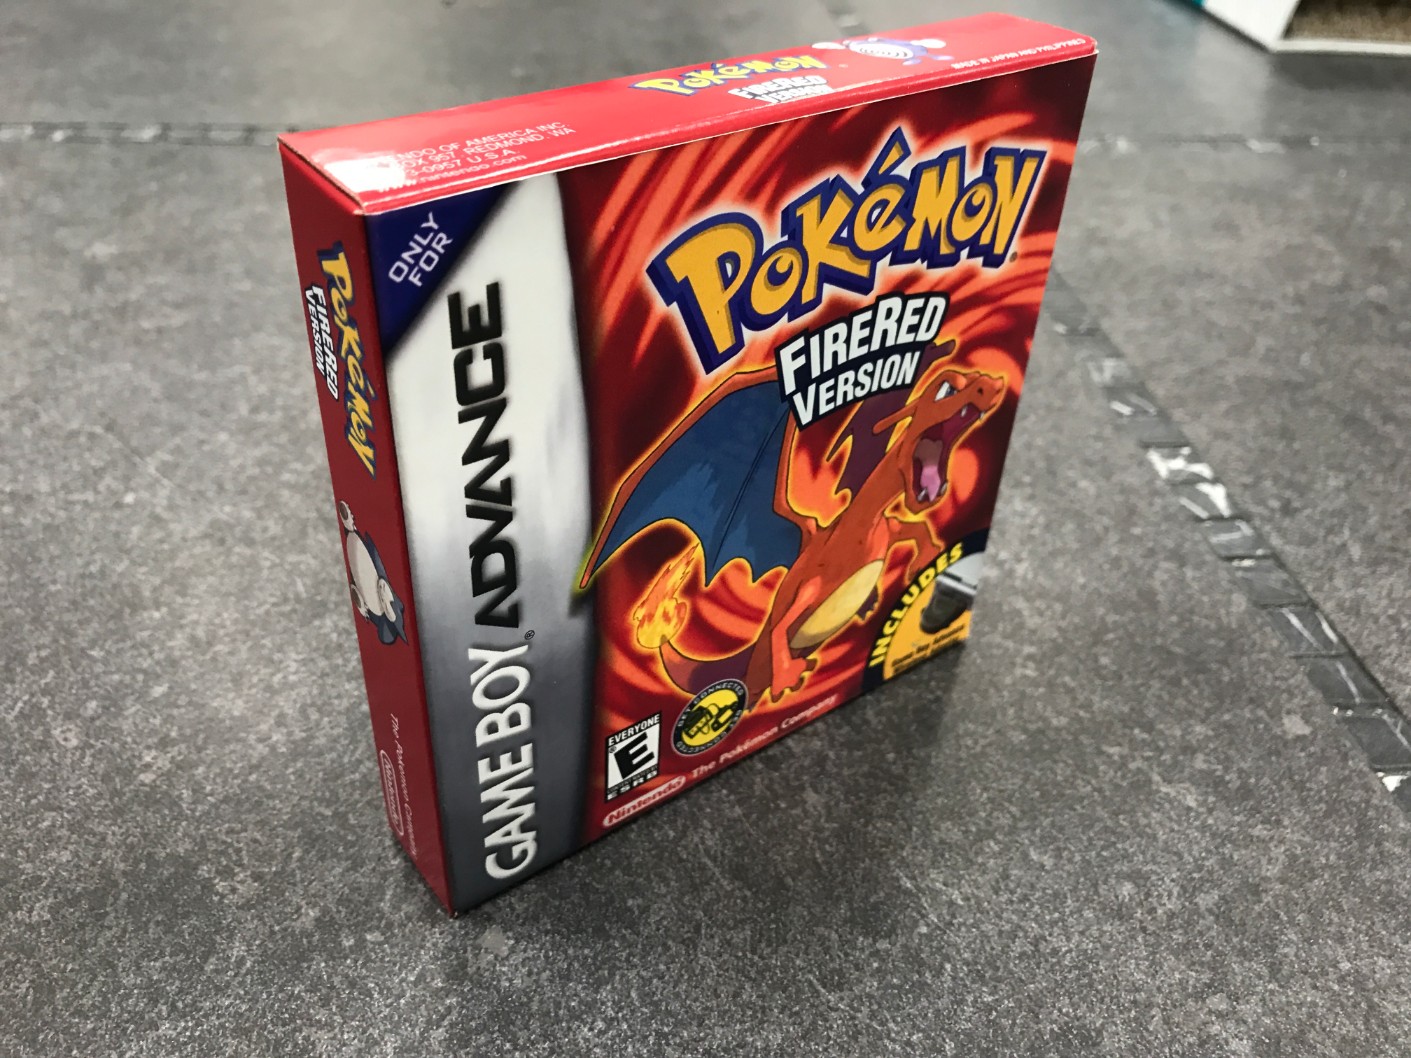 Pokemon: FireRed Version